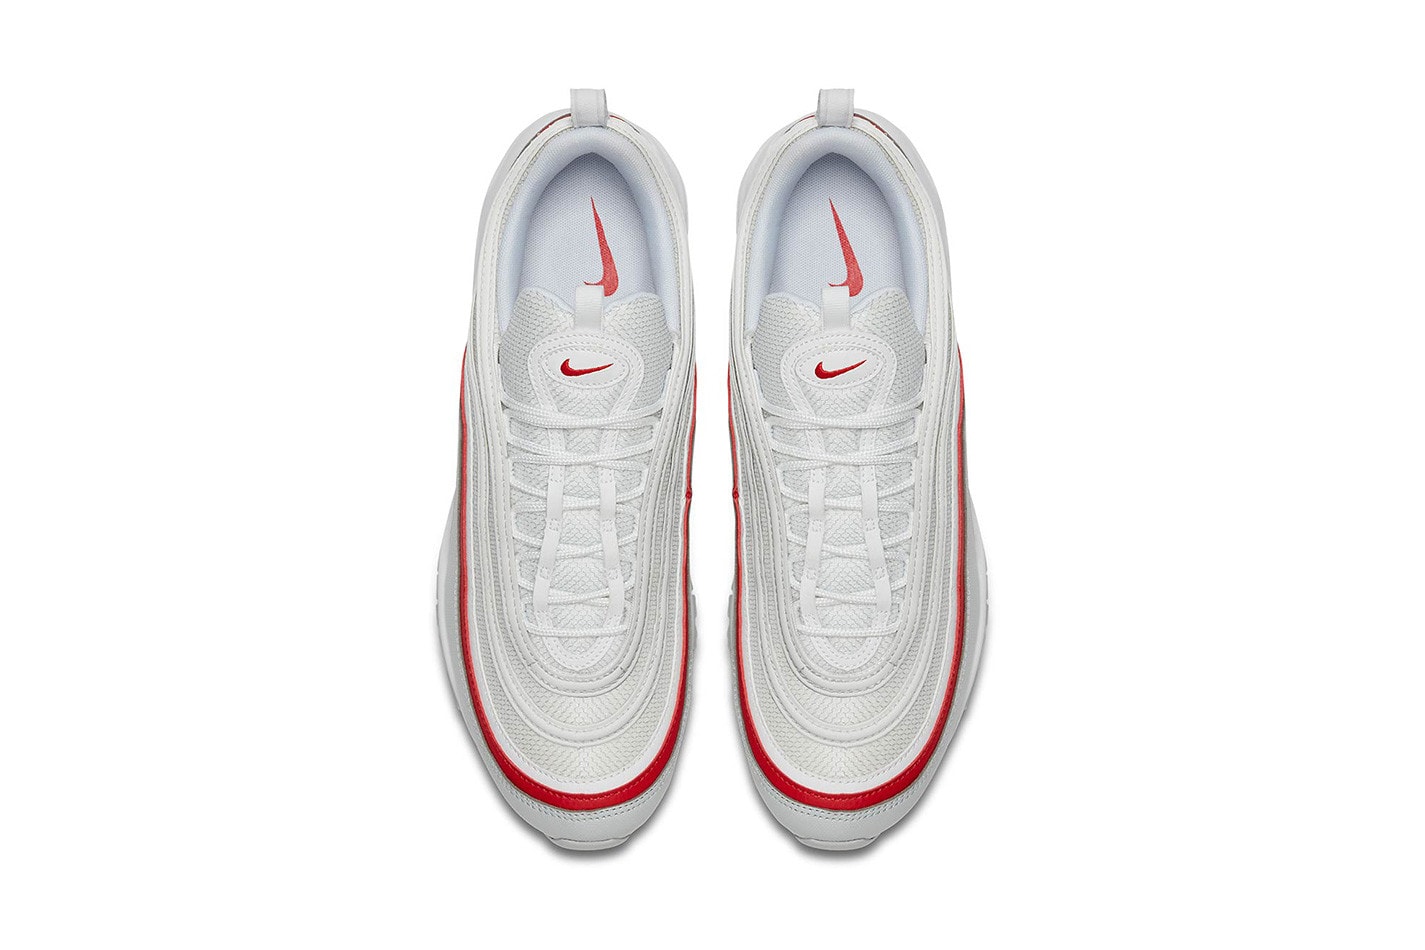 Nike Air Max 97 全新配色設計「White/Red」